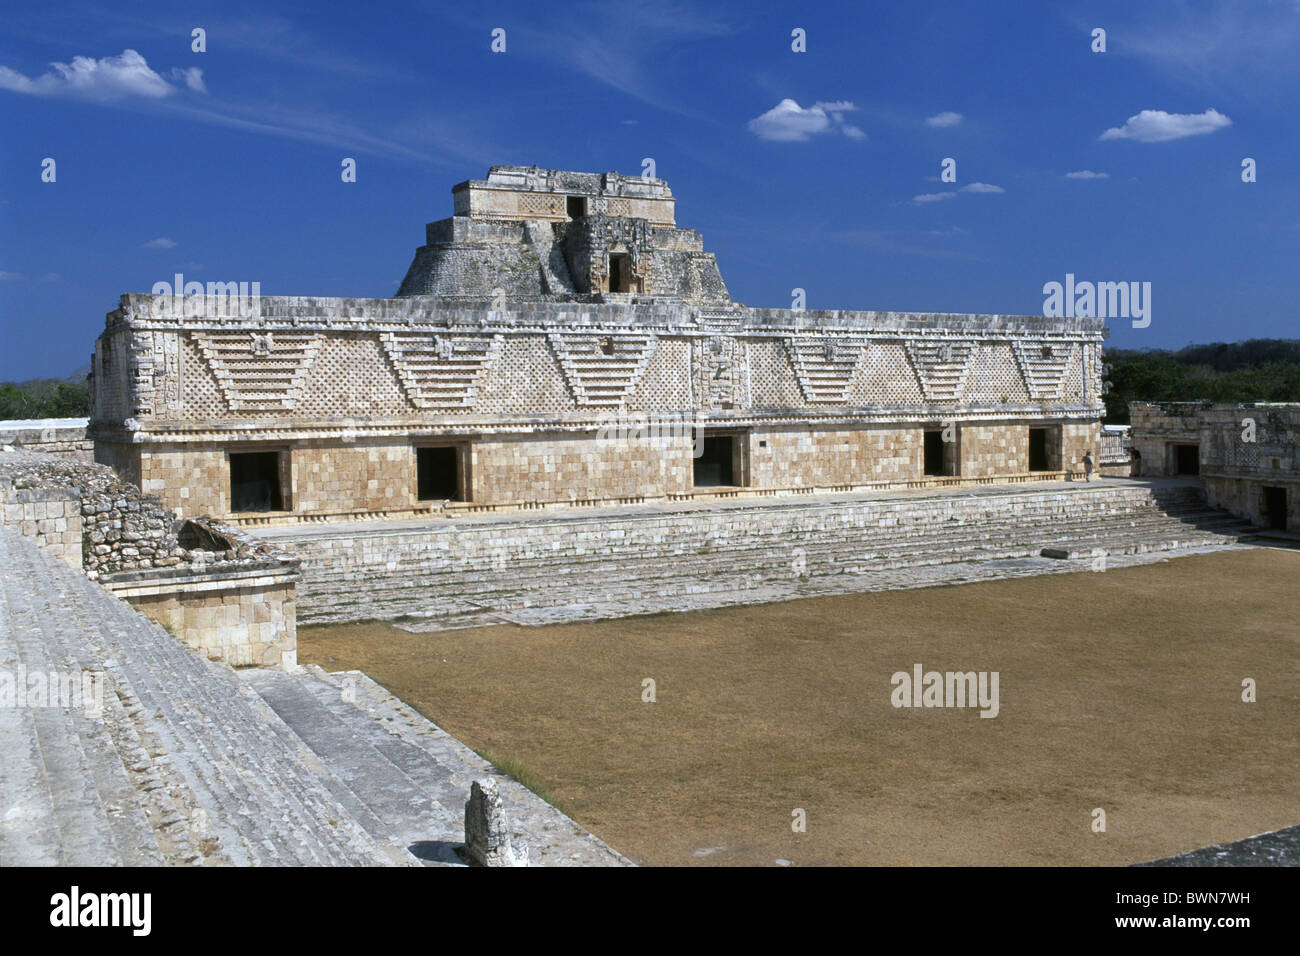 Maya Kultur Uxmal Yucatan Mexiko Mittelamerika Amerika uralten Pyramide Reisen Tempel Urlaub UNESCO Wo Stockfoto